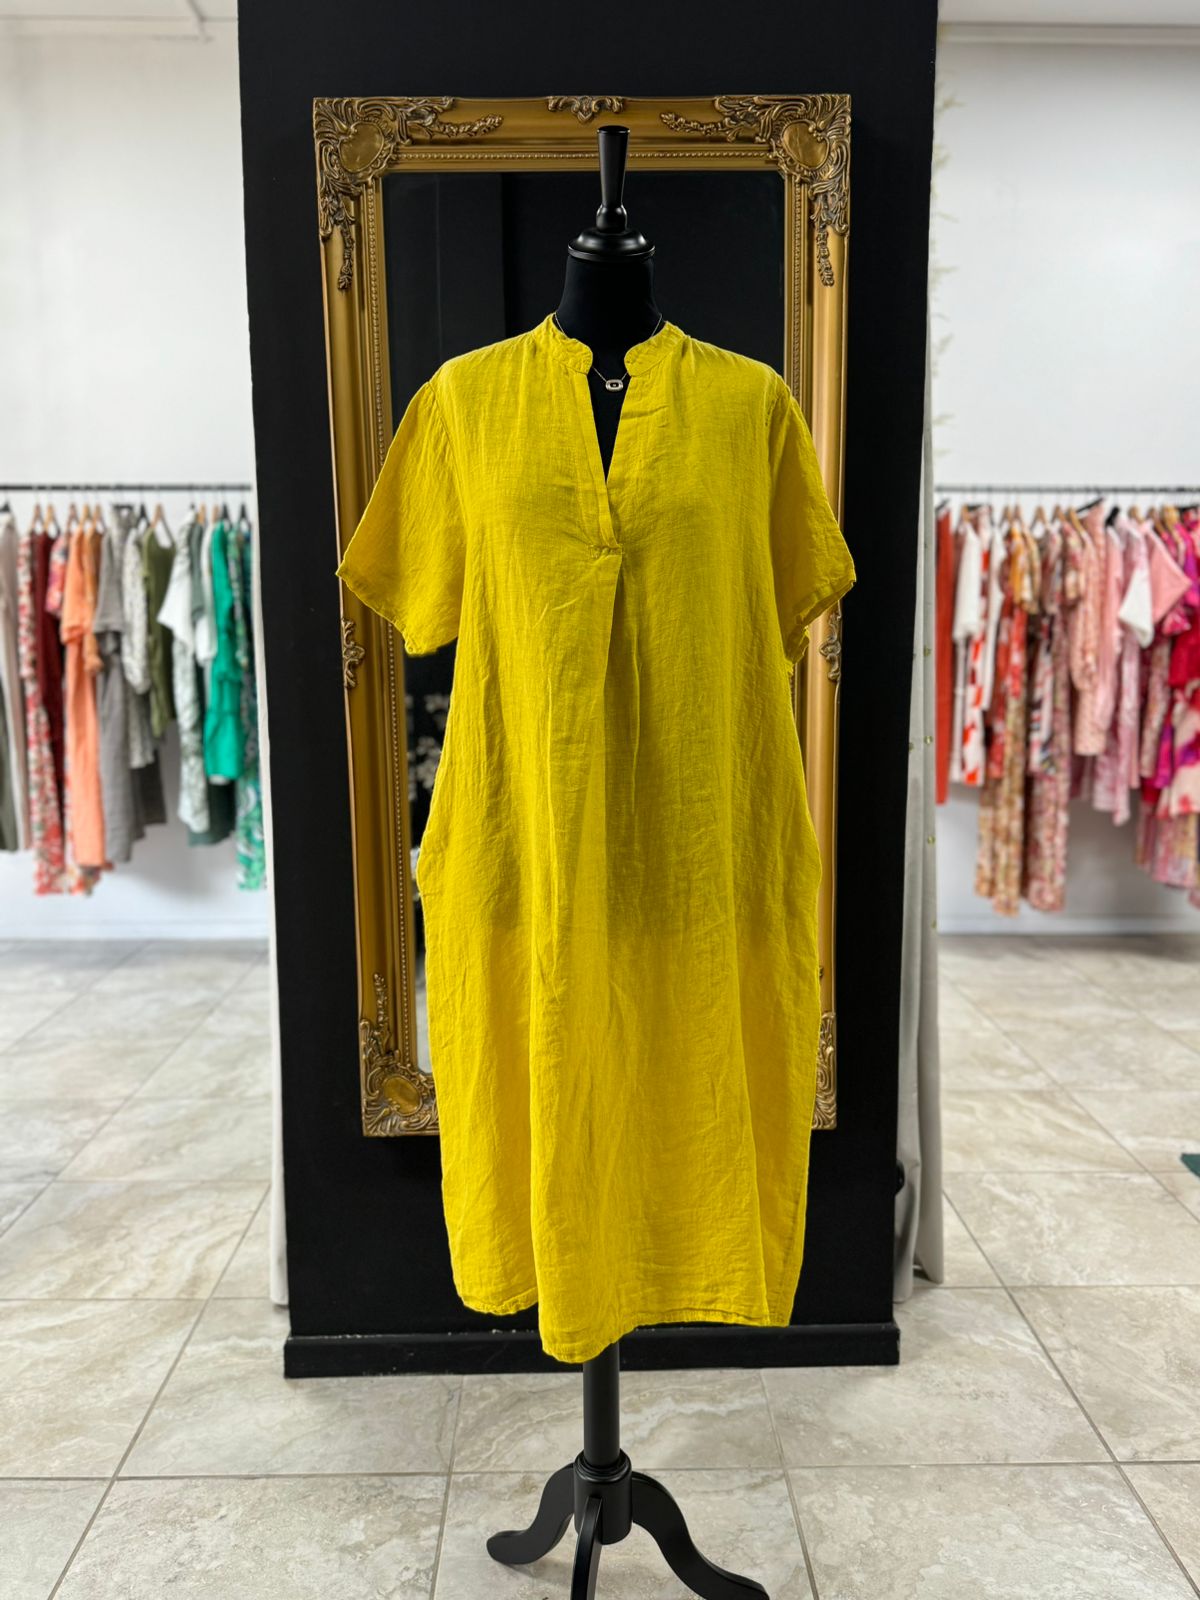 robe melissa moutarde jaune perle des iles 974 mode femme grande taille